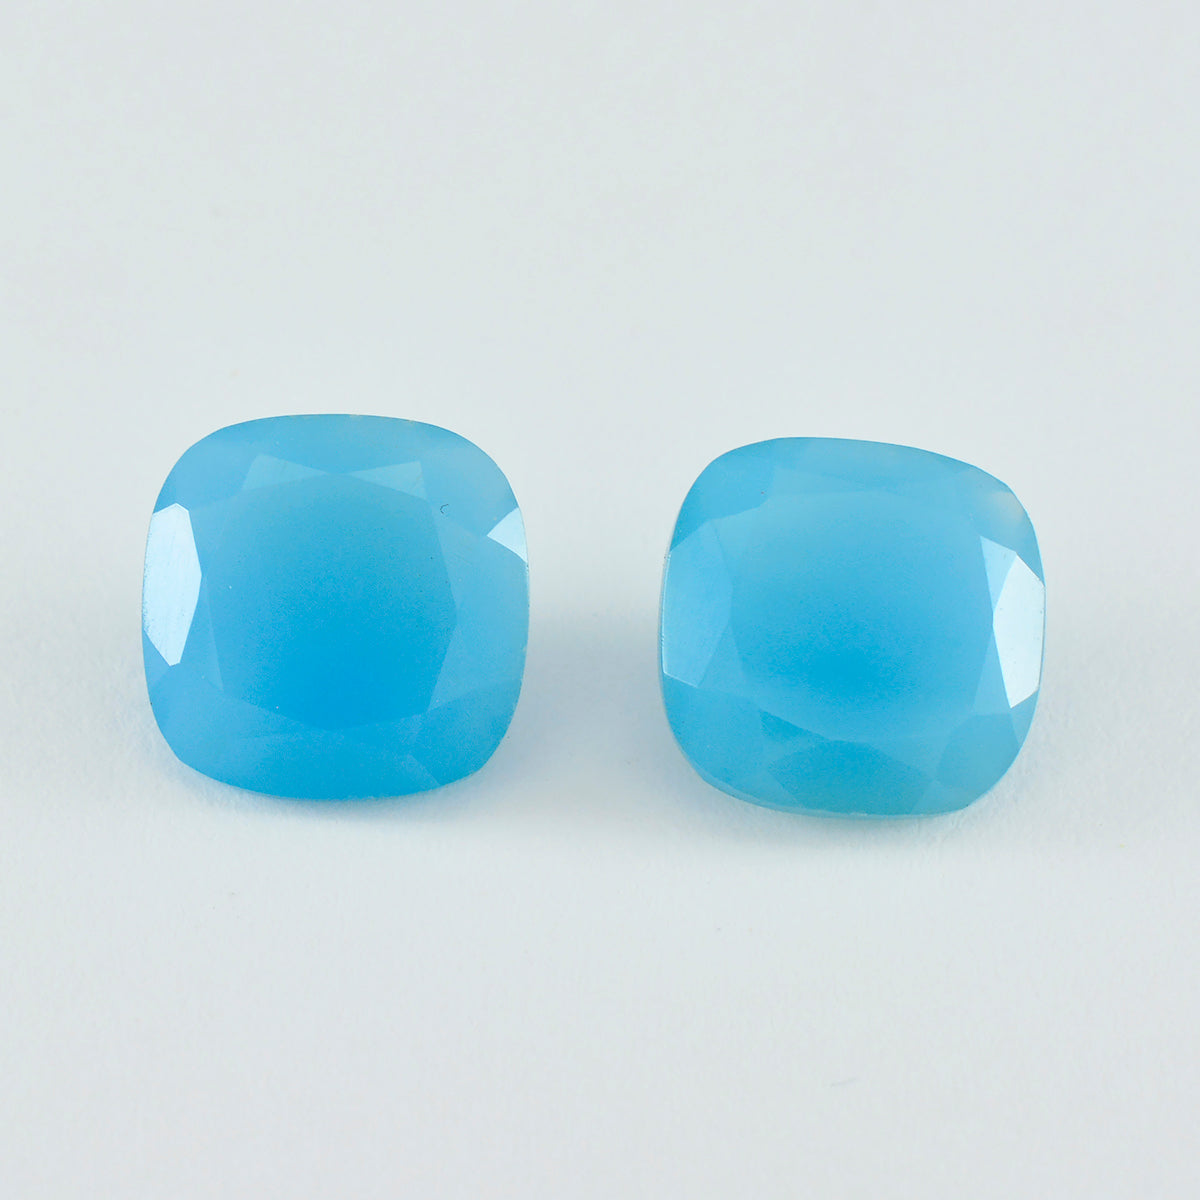 Riyogems 1PC Natural Blue Chalcedony Faceted 13x13 mm Cushion Shape pretty Quality Loose Gems